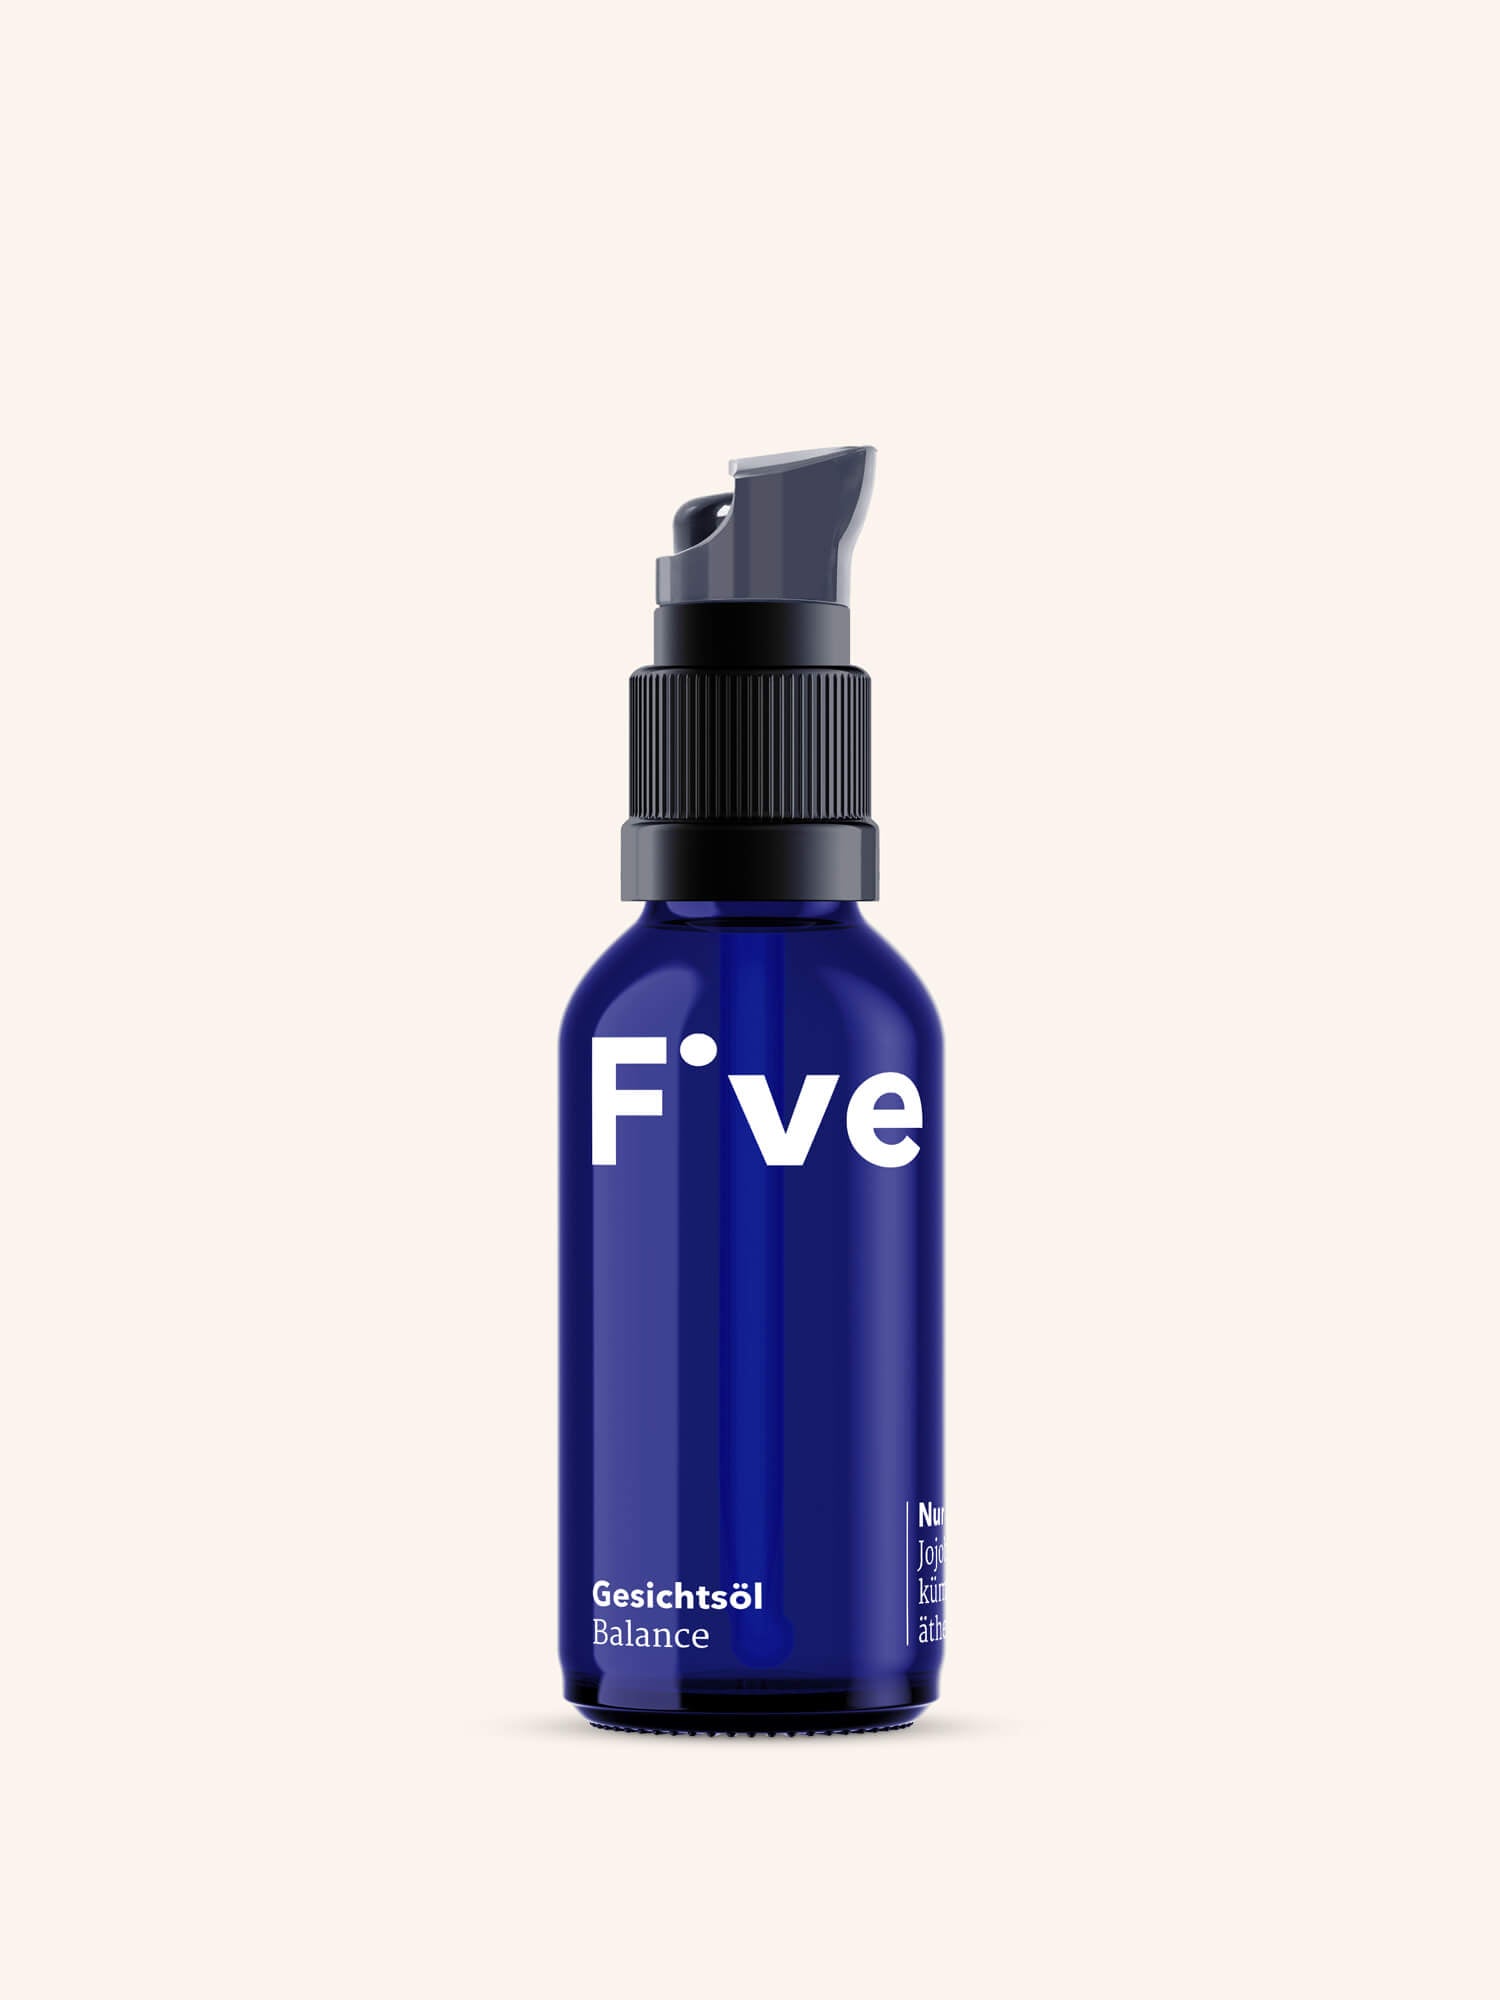 FIVE Gesichtsöl Balance | Five Skincare